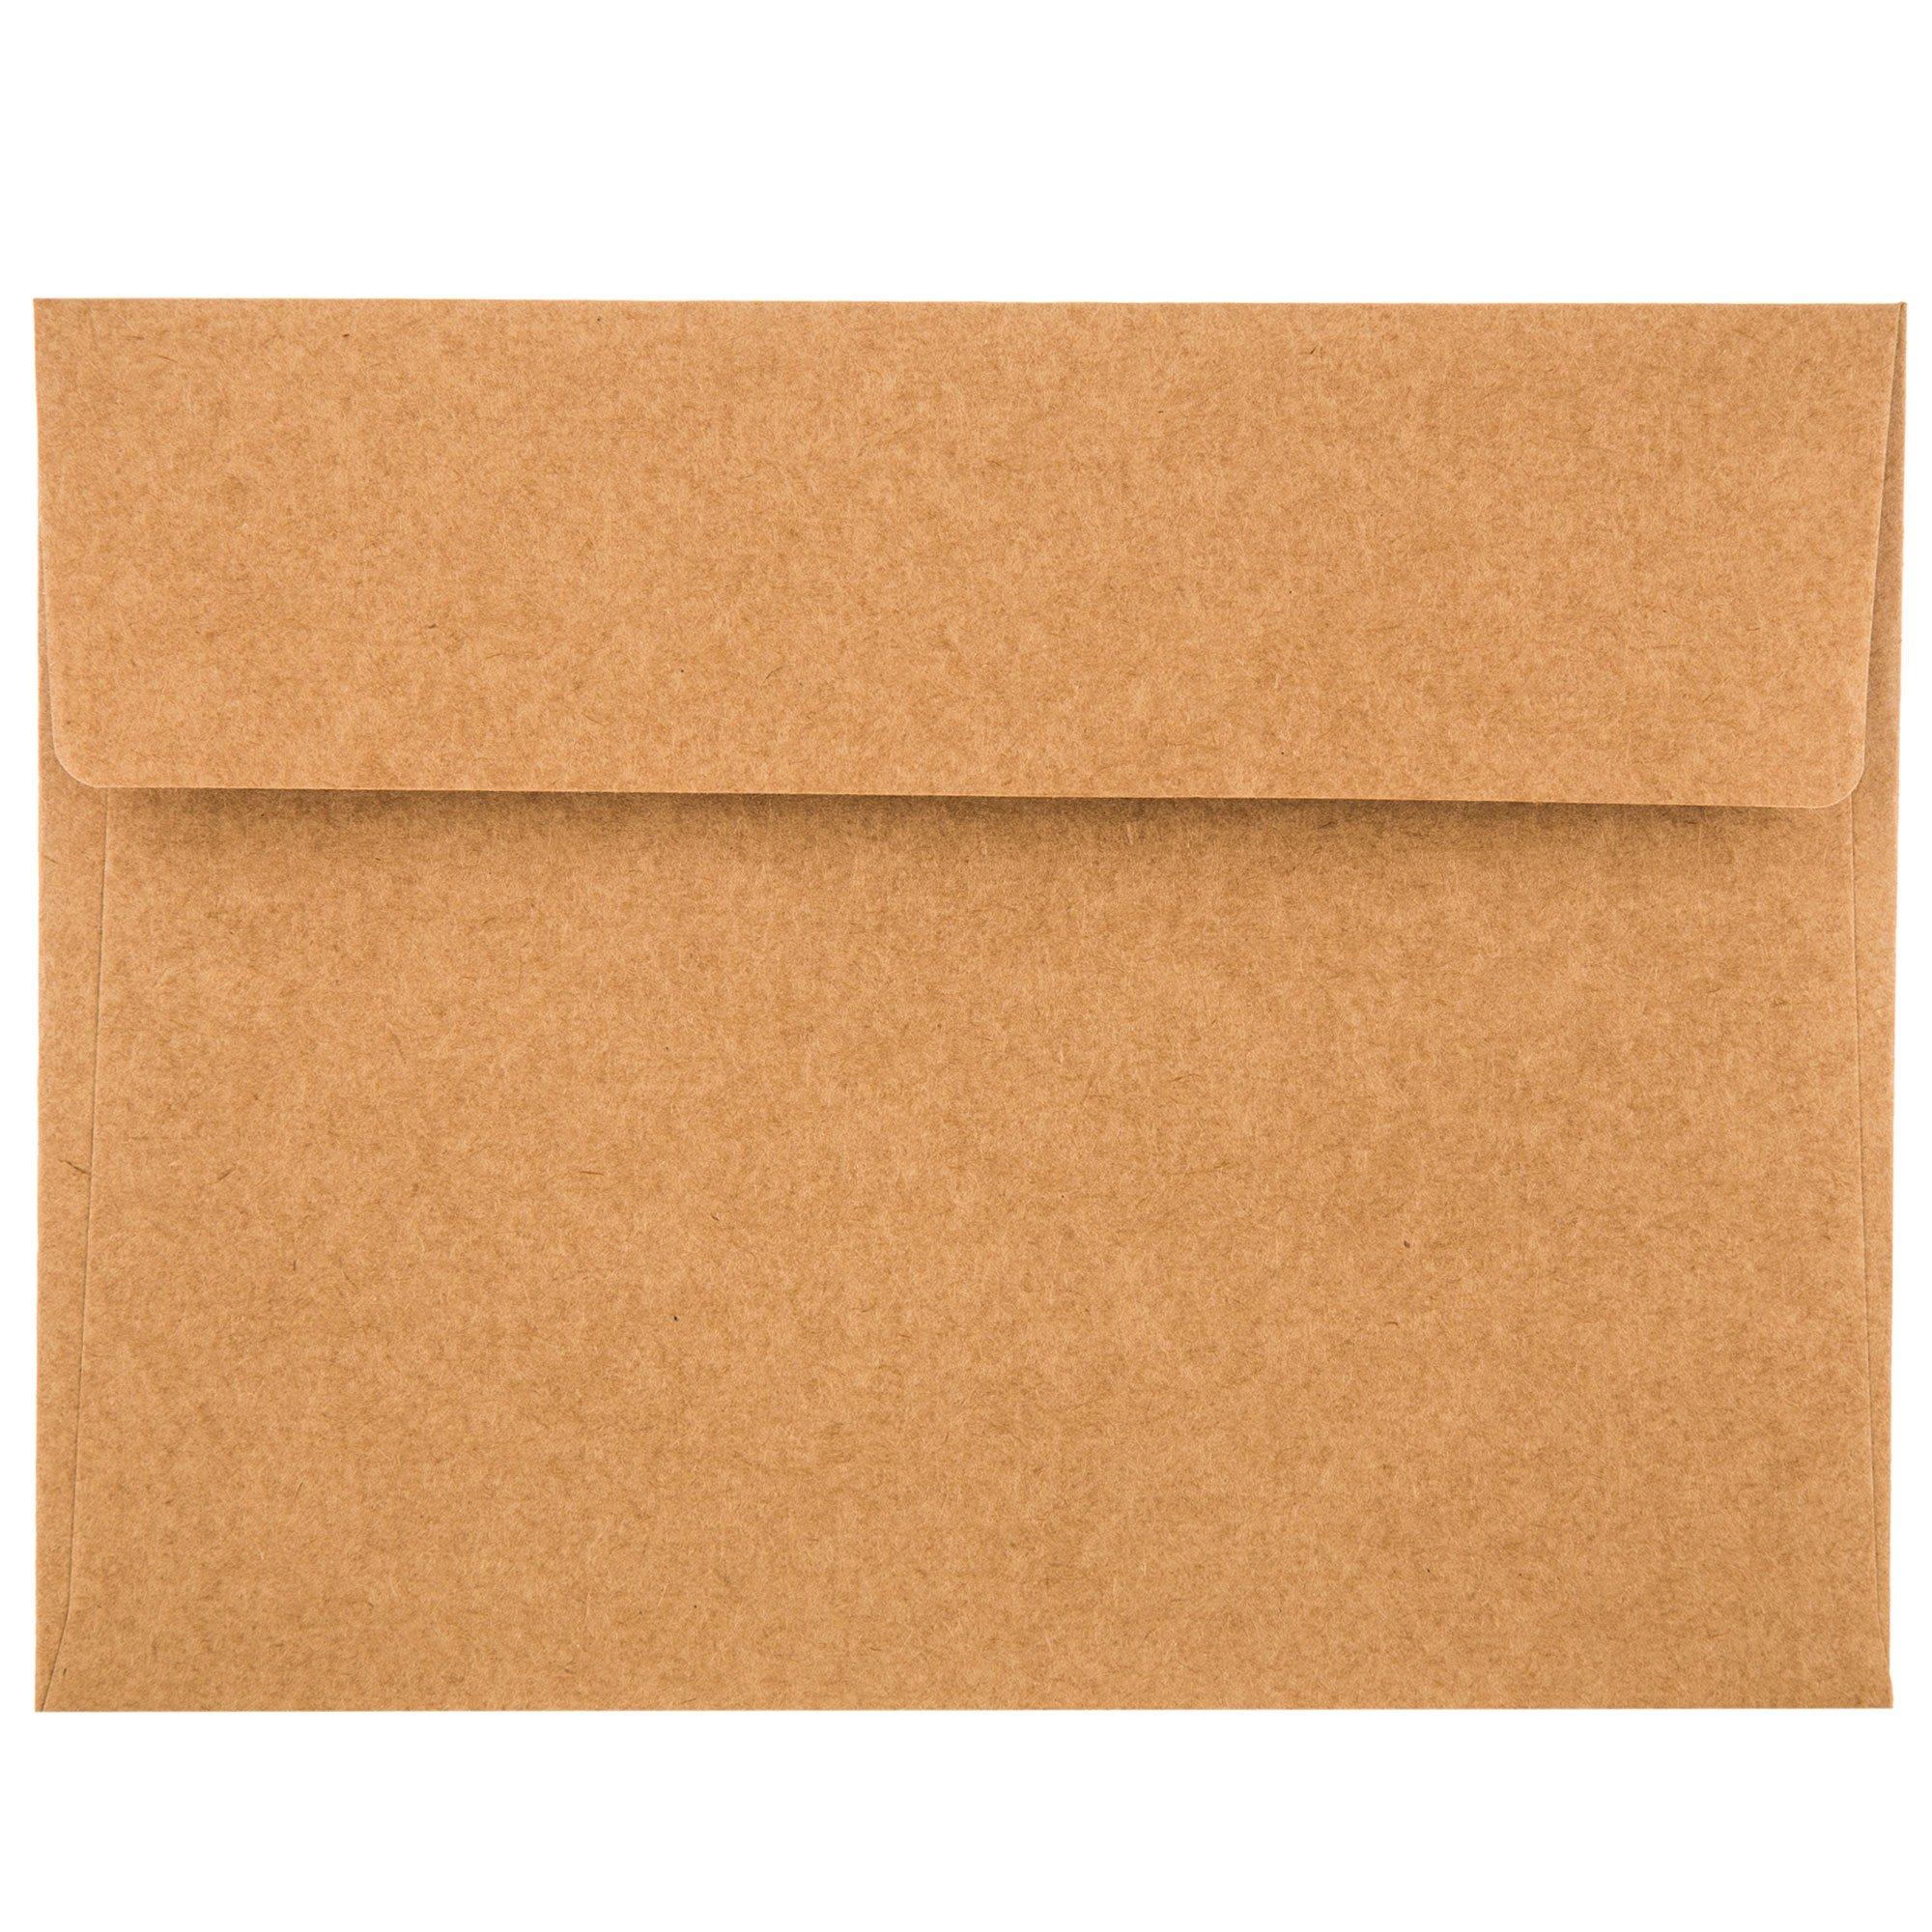 boxed-envelopes-hobby-lobby-1341593